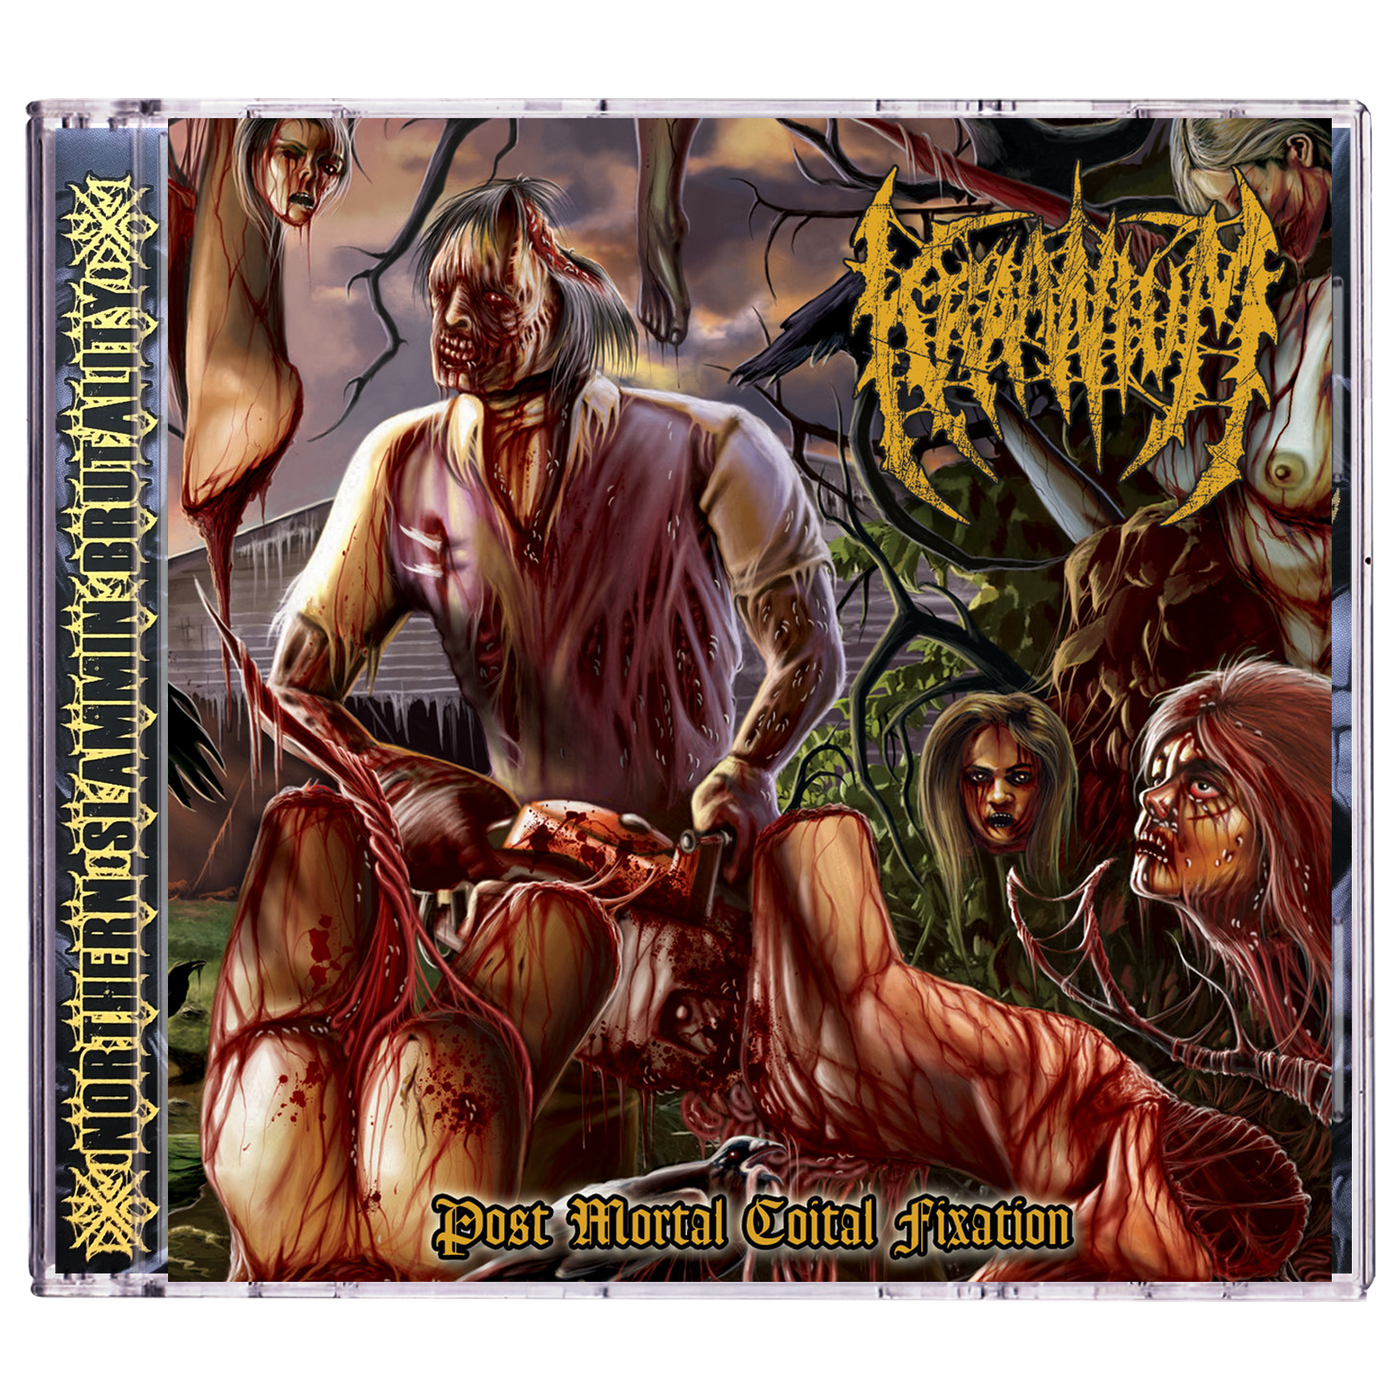 Kraanium 'Post Mortal Coital Fixation' CD